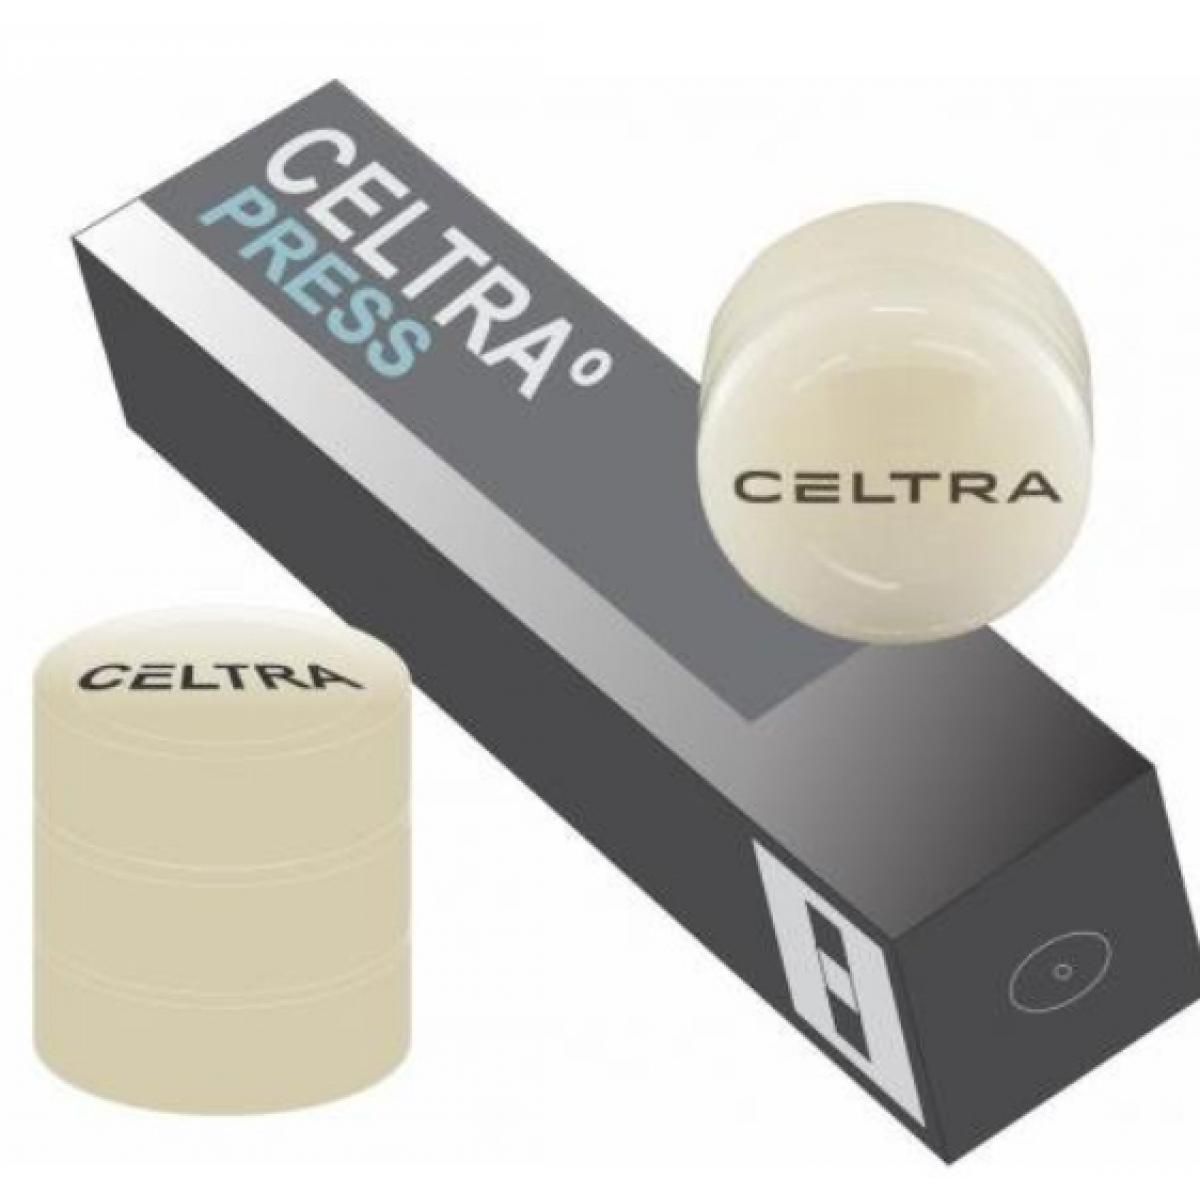 CELTRA PRESS MT LT BL2 5 X 3 GR DENTSPLY -